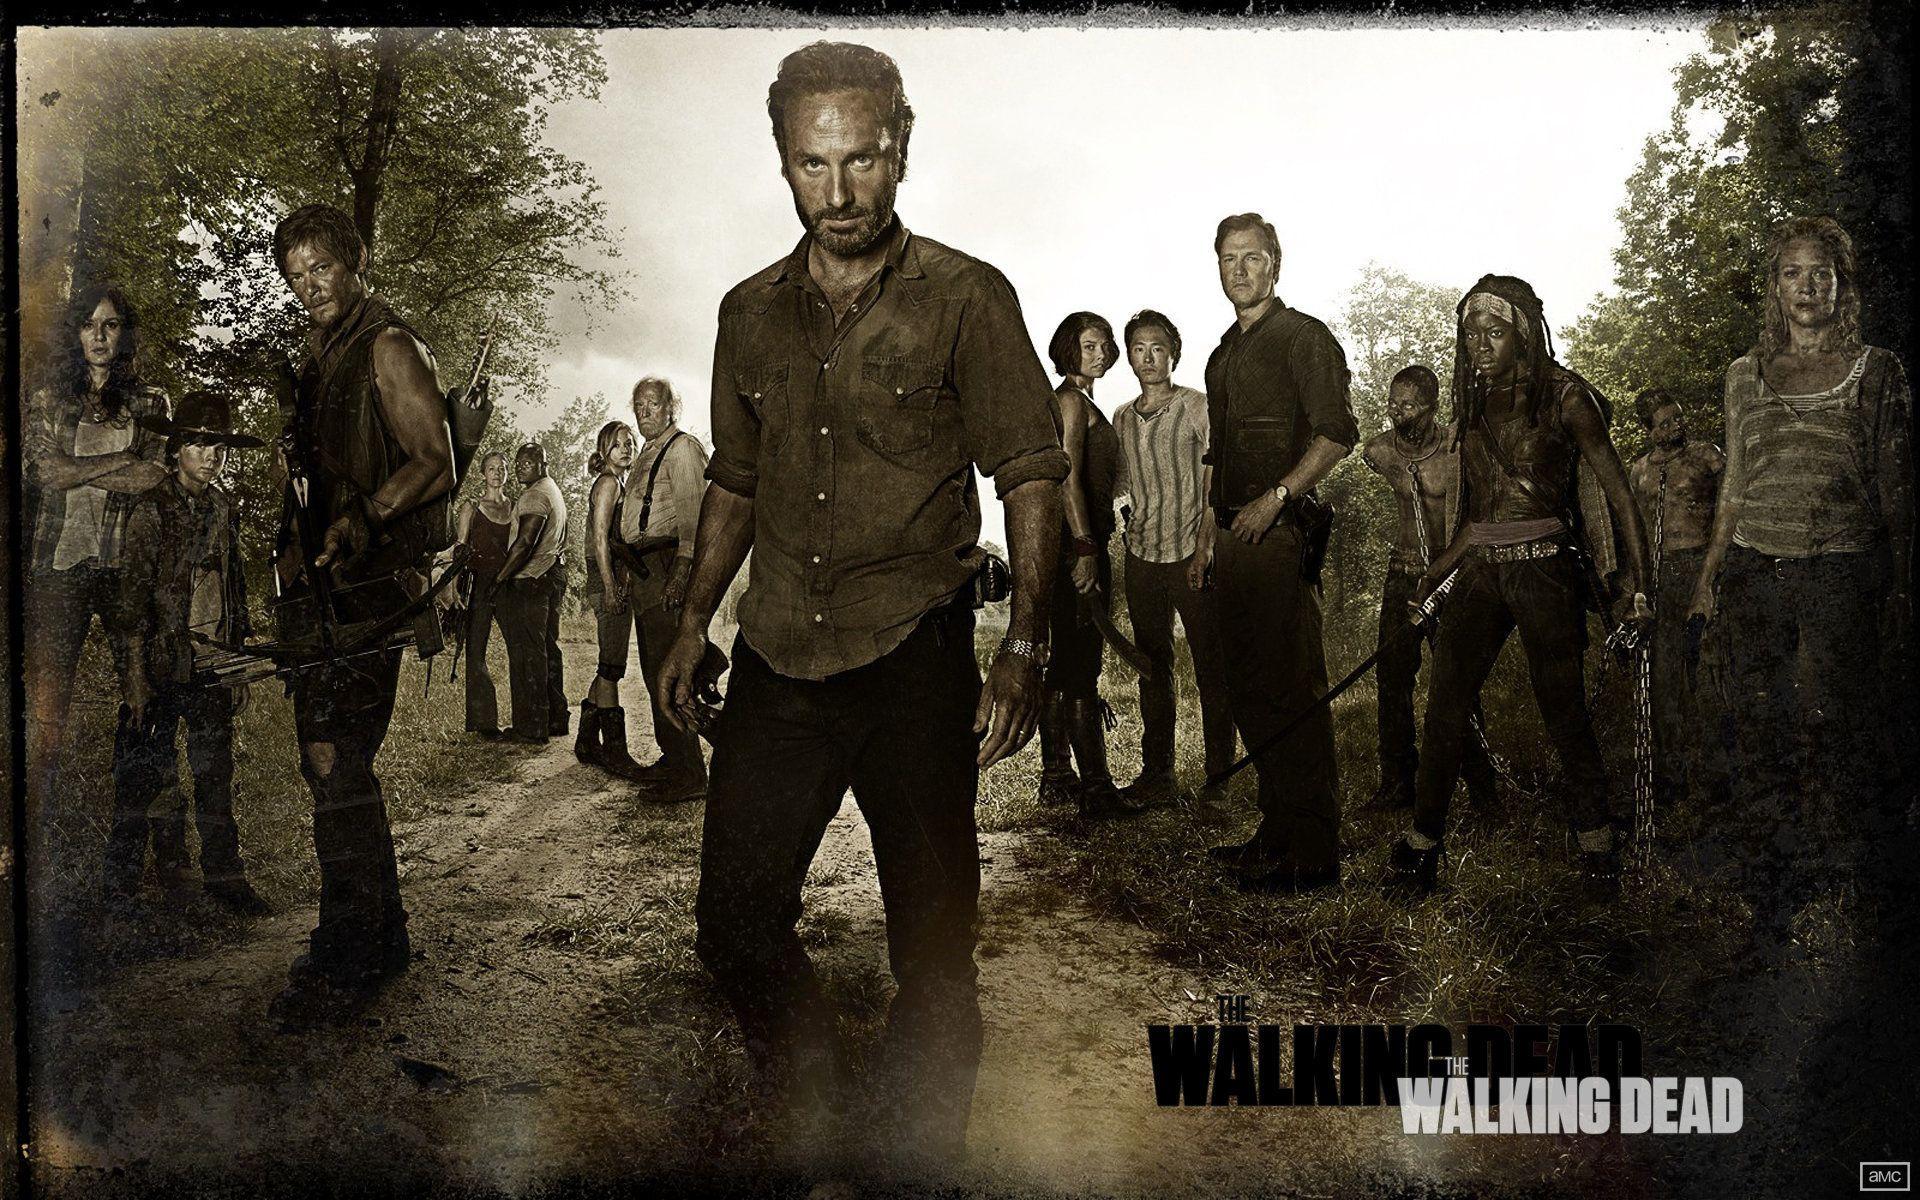 The Walking Dead Wide Wallpaper, High Definition, High